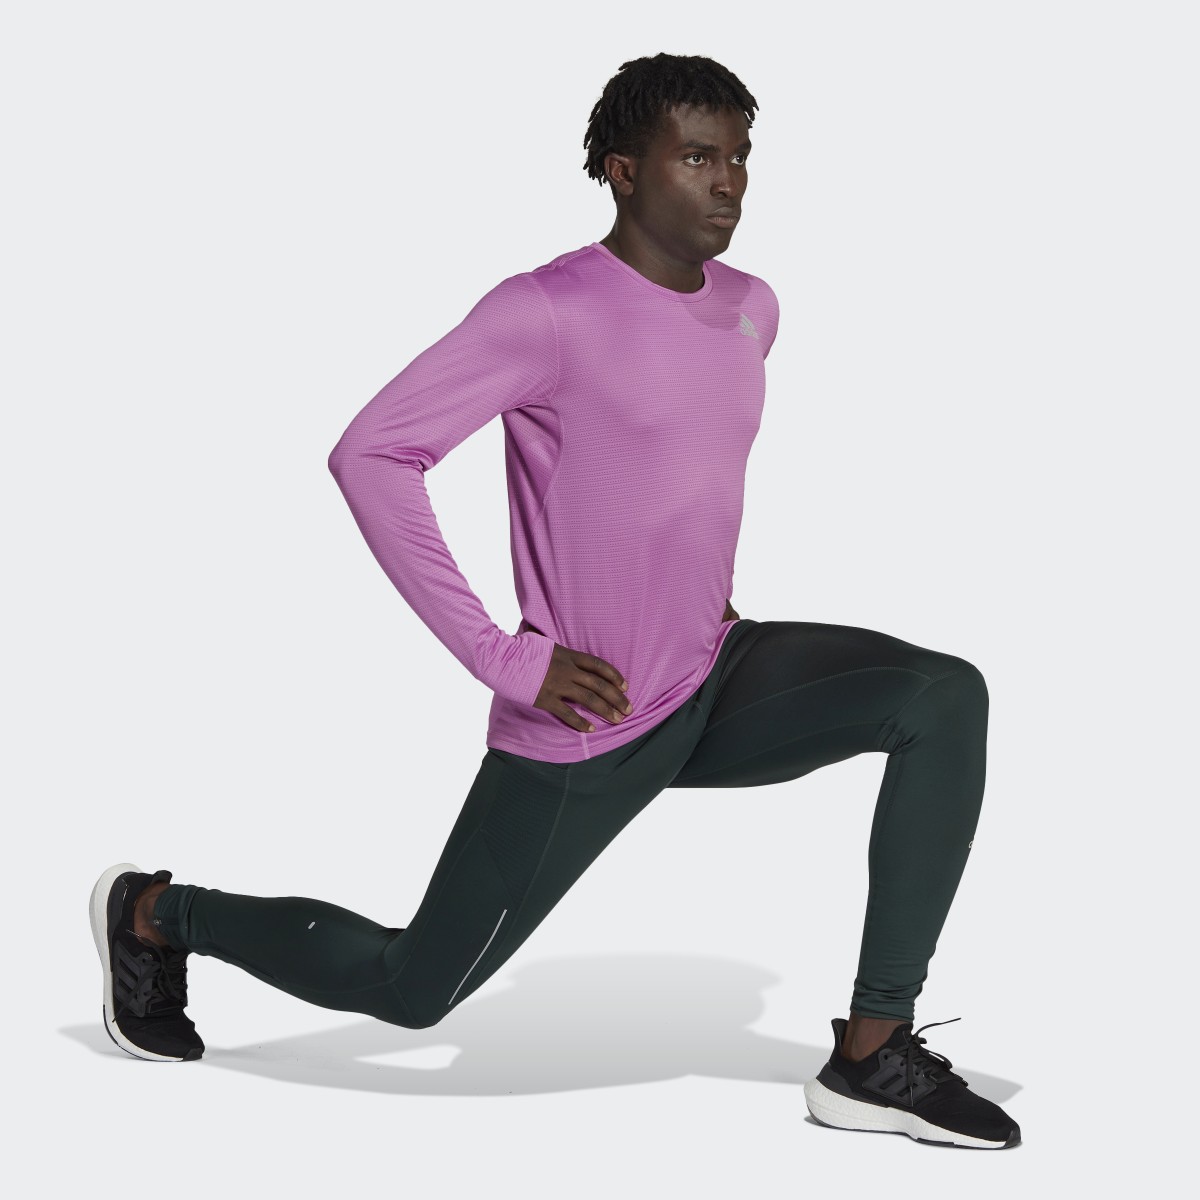 Adidas Own the Run Long-Sleeve Top. 4